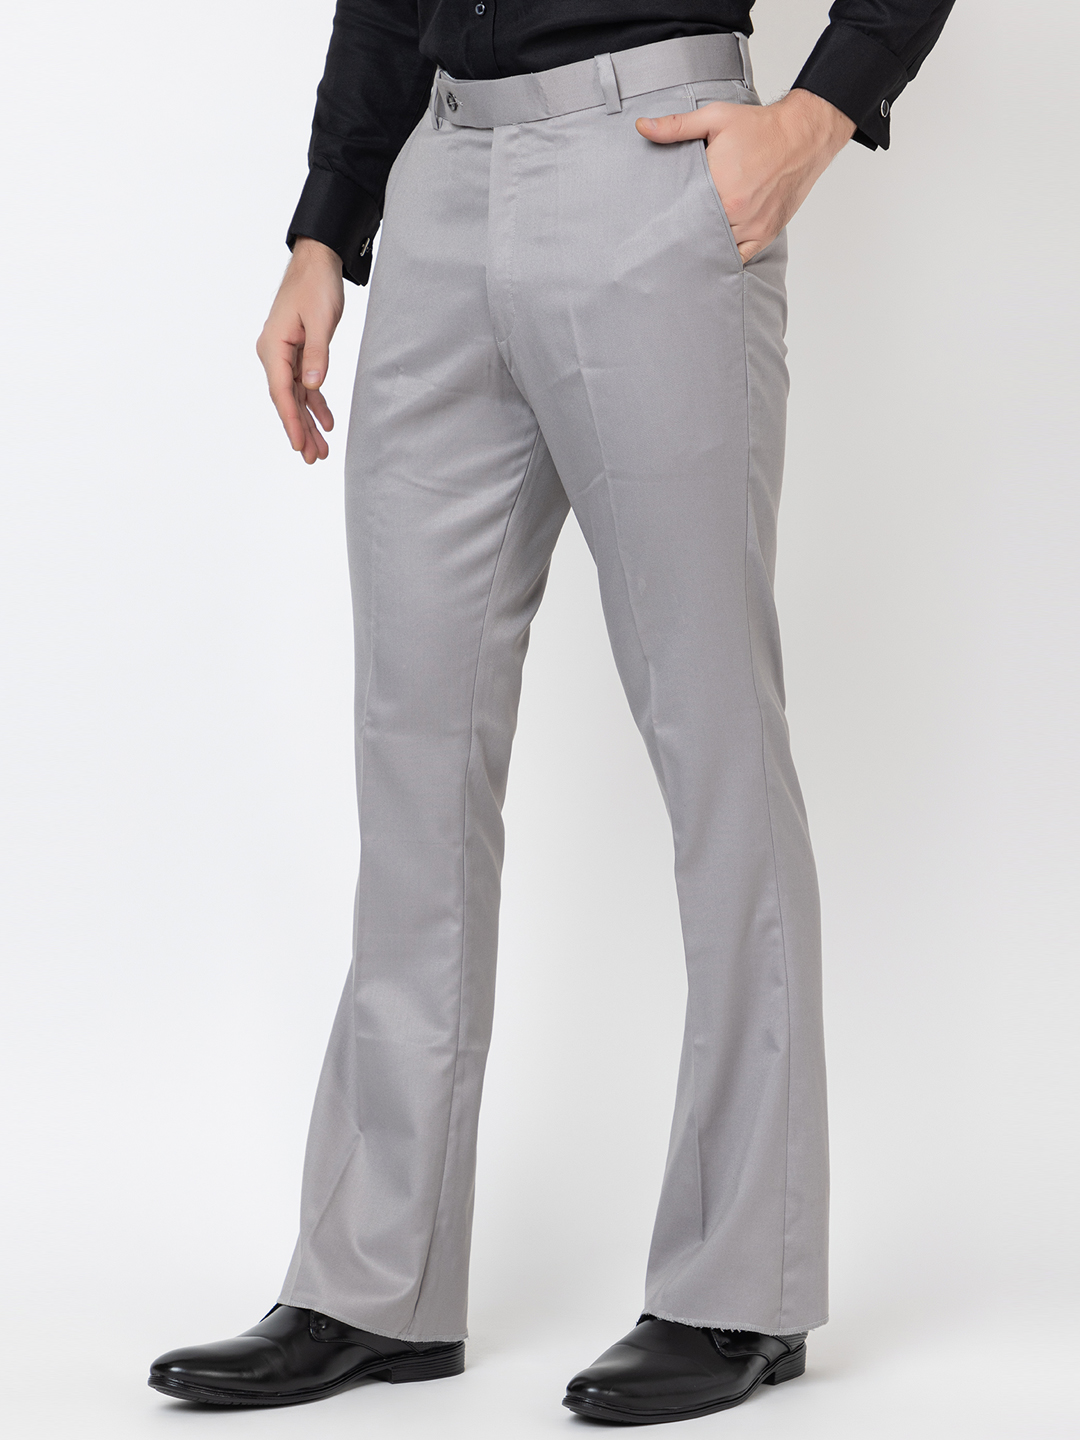 Charming Dark Silver Formal Lycra Pants at Rs 999.00 | Men Lycra Pant | ID:  2850482408948